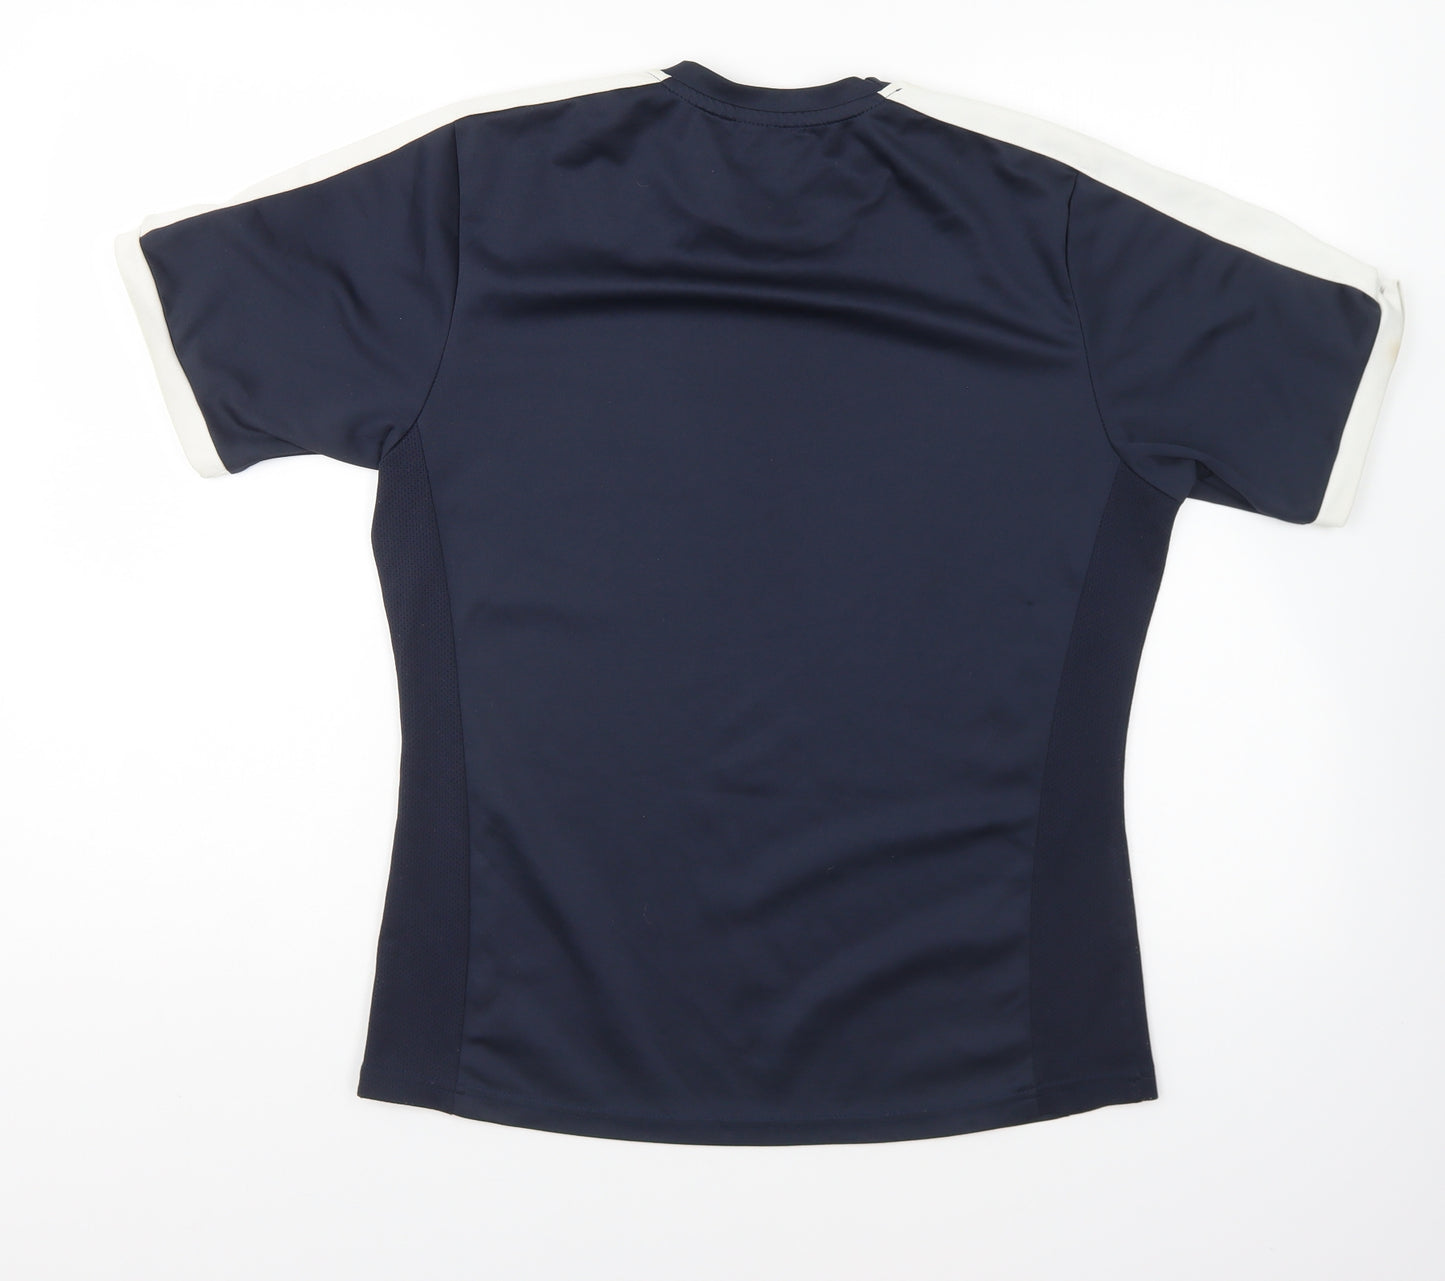 Sondico Mens Blue Polyester Basic T-Shirt Size S Round Neck Pullover